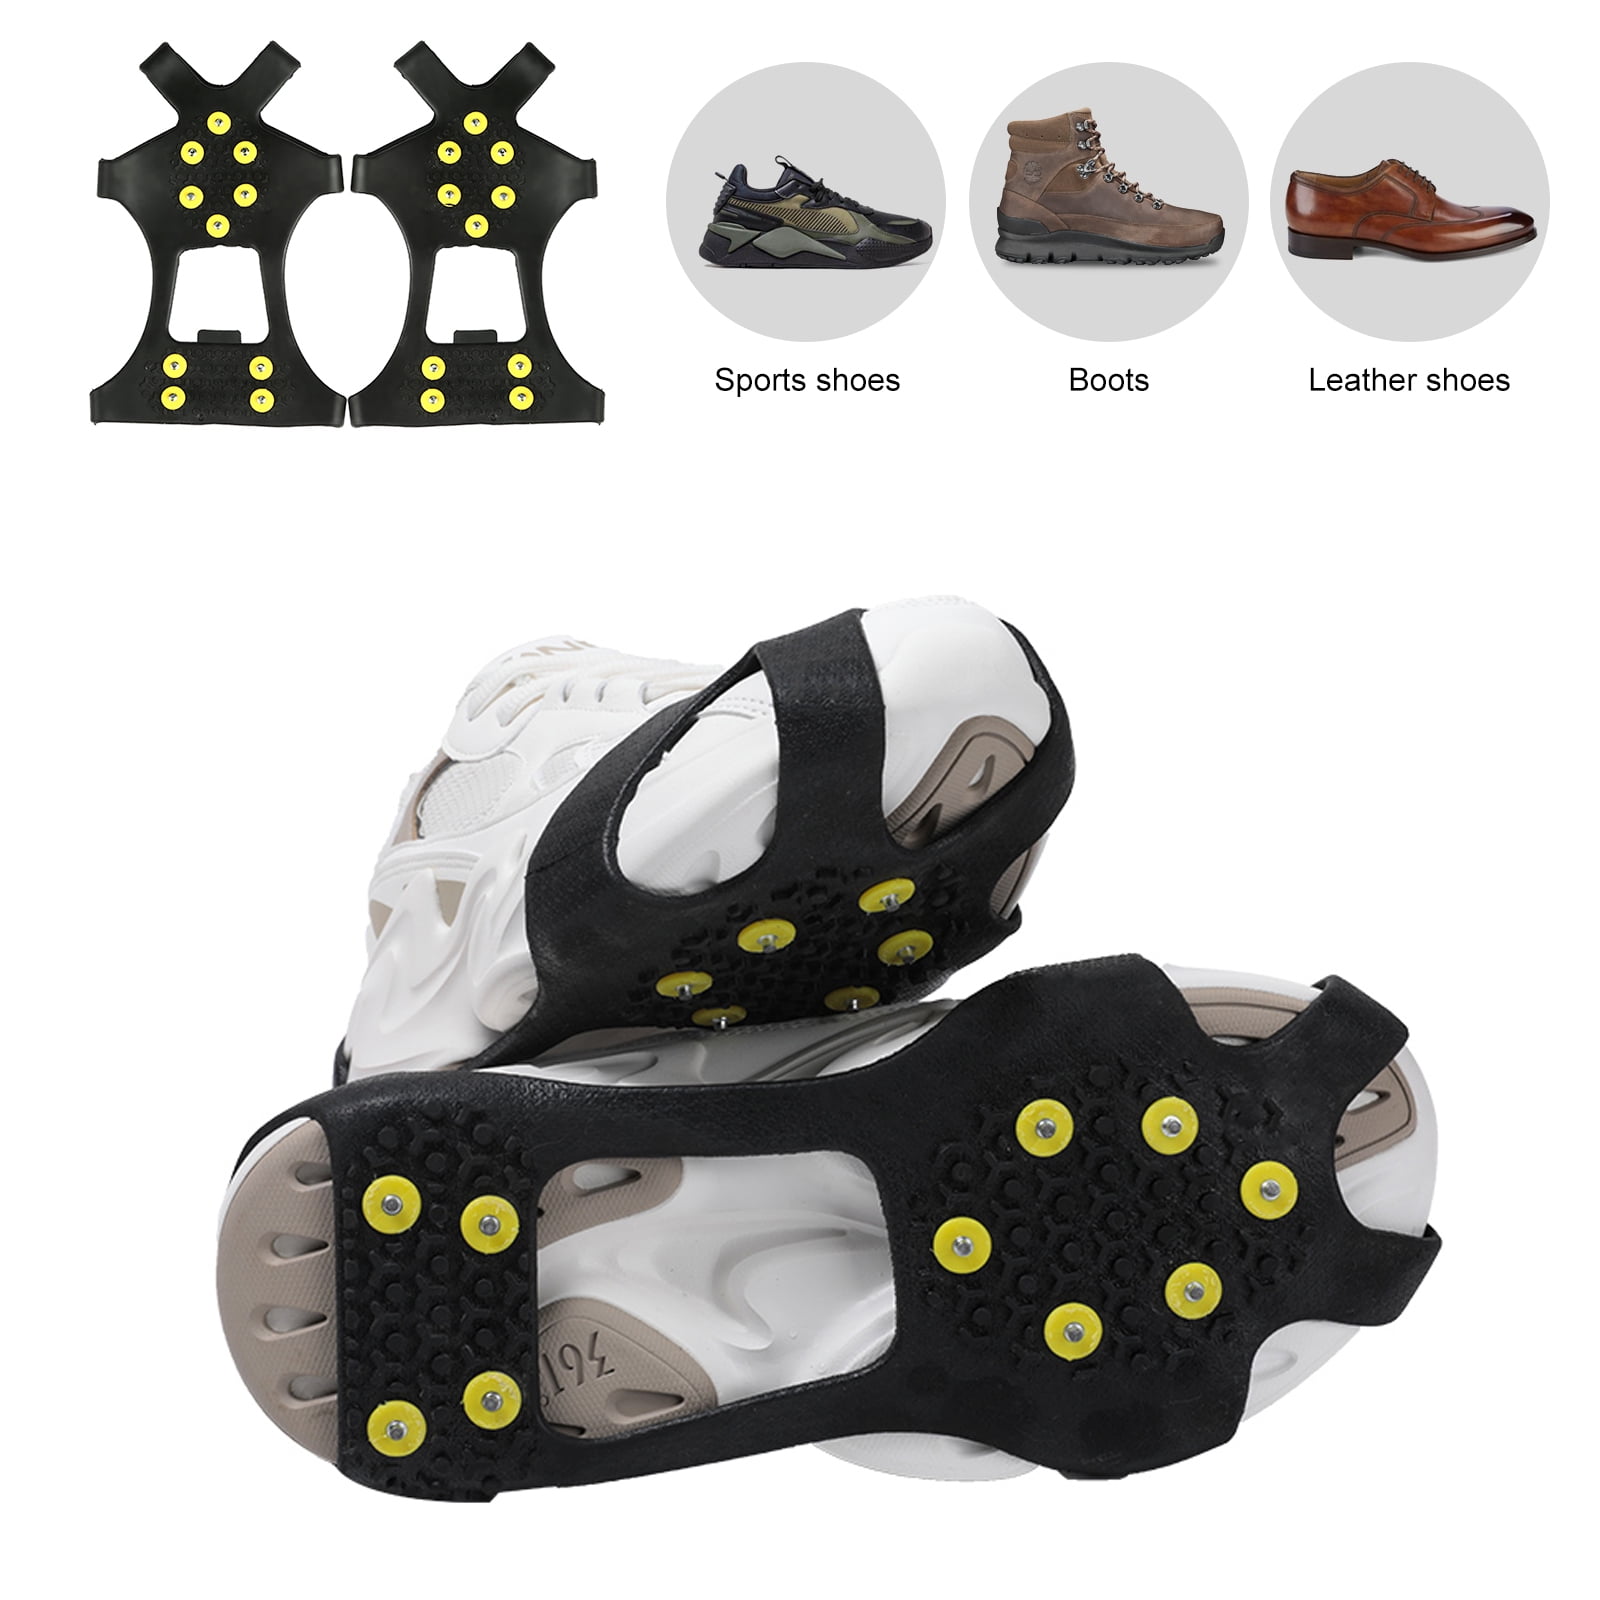 5-Teeth Ice Snow Shoes Spike Claws Boots Chain Crampon Anti-slip Climbing Sho YJ 